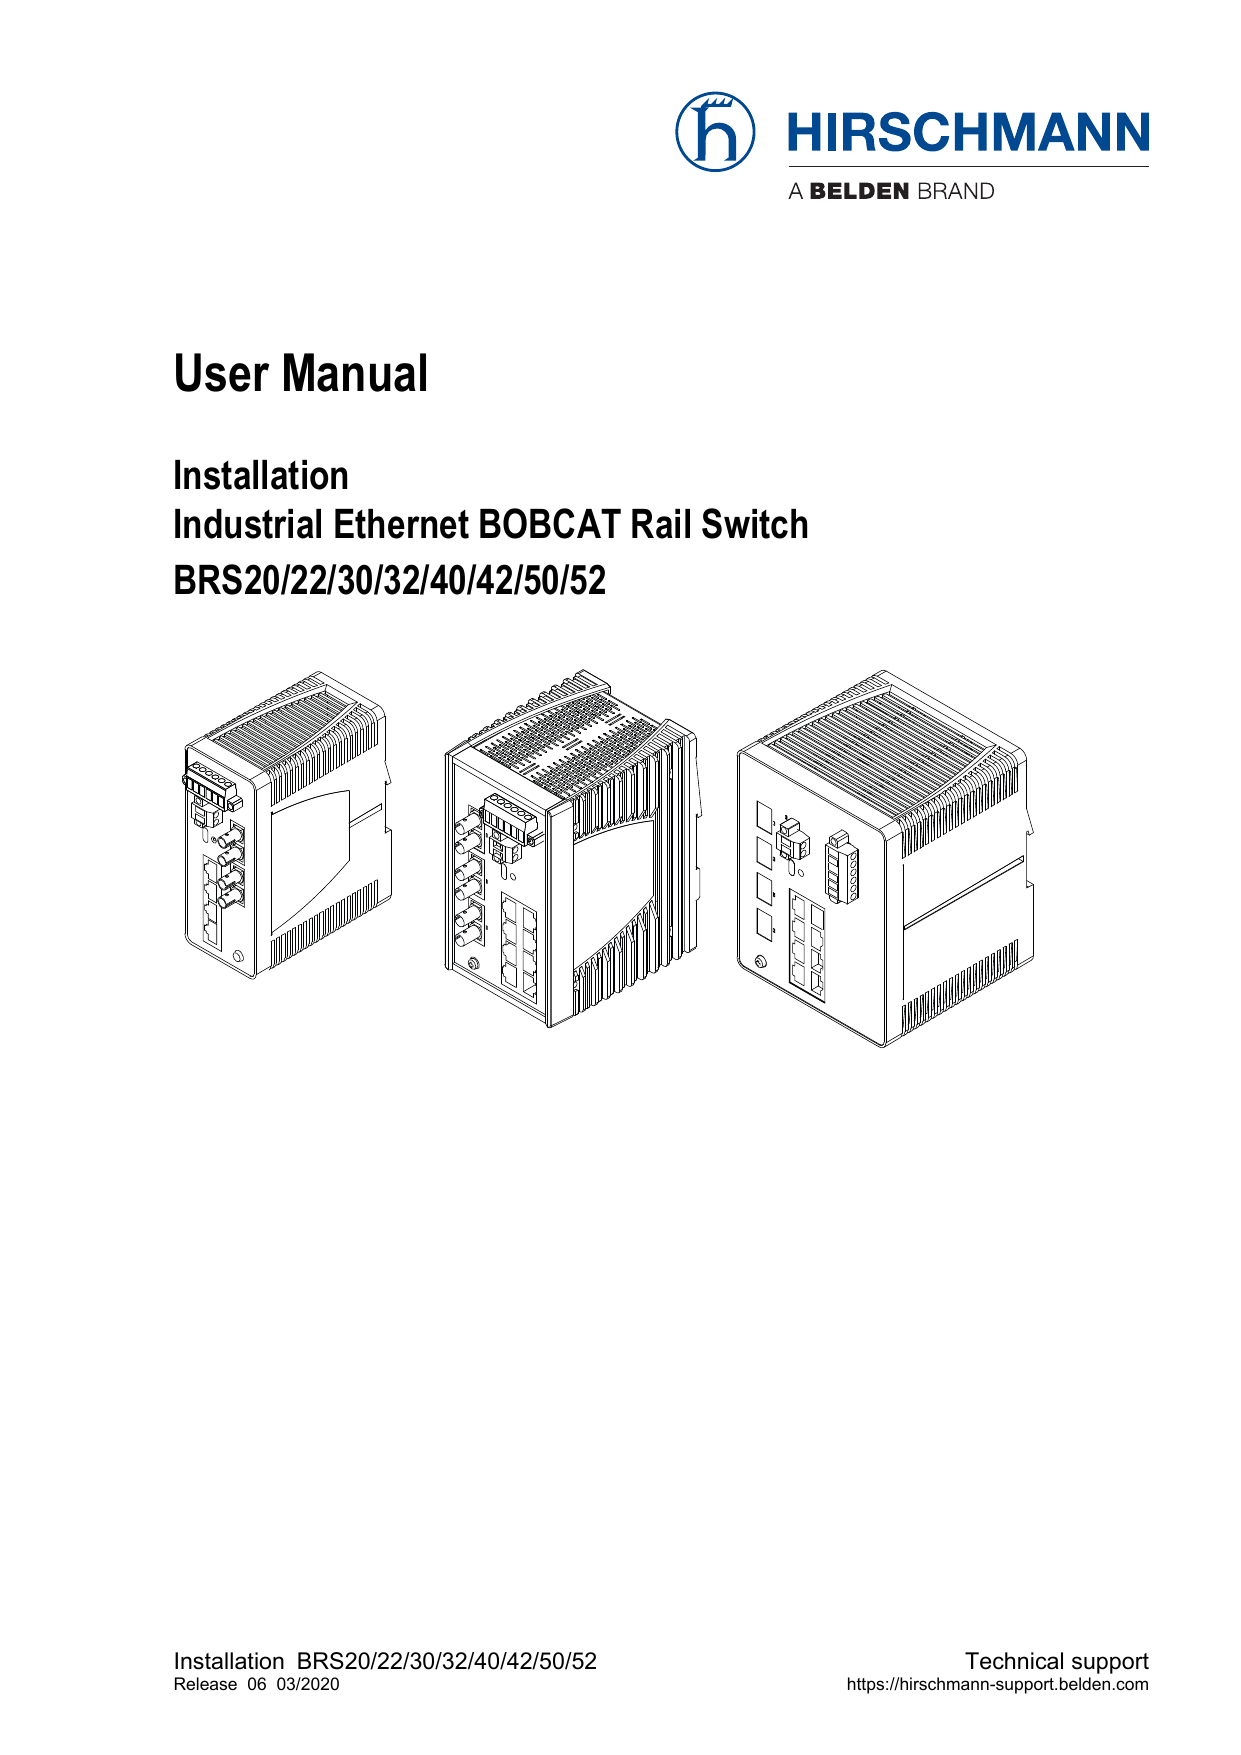 HIRSCHMANN M-SFP-TX/RJ45 Compatible 942 161-001 1000BASE-T Gigabit Ethernet